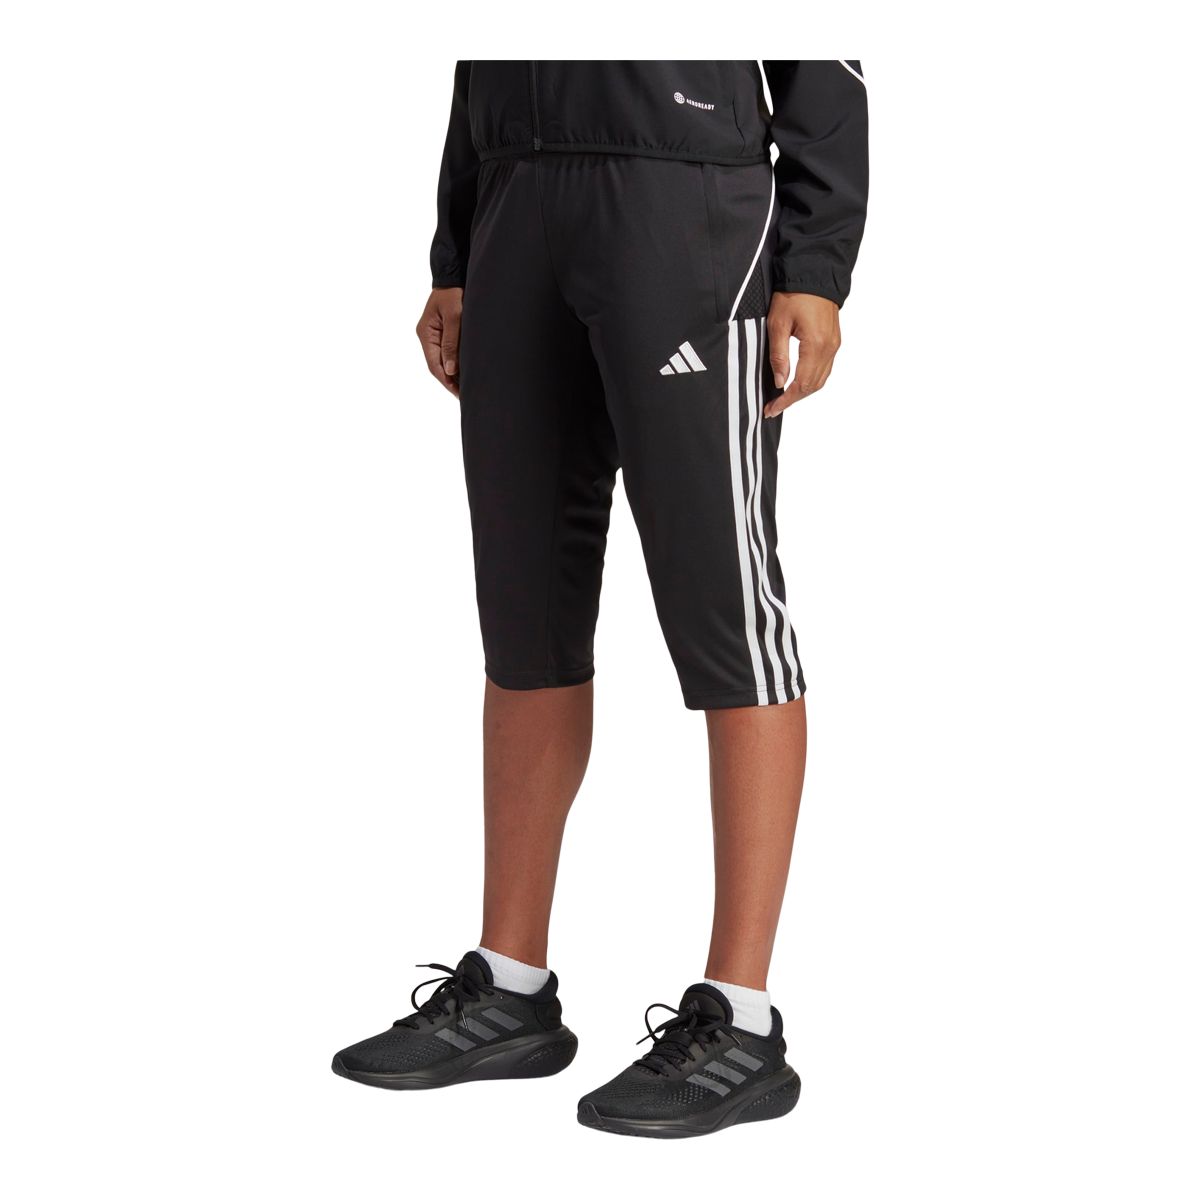 Adidas Tiro 3/4 Pants Men's Sports Soccer Training Shorts Black /Gray  size Large | eBay